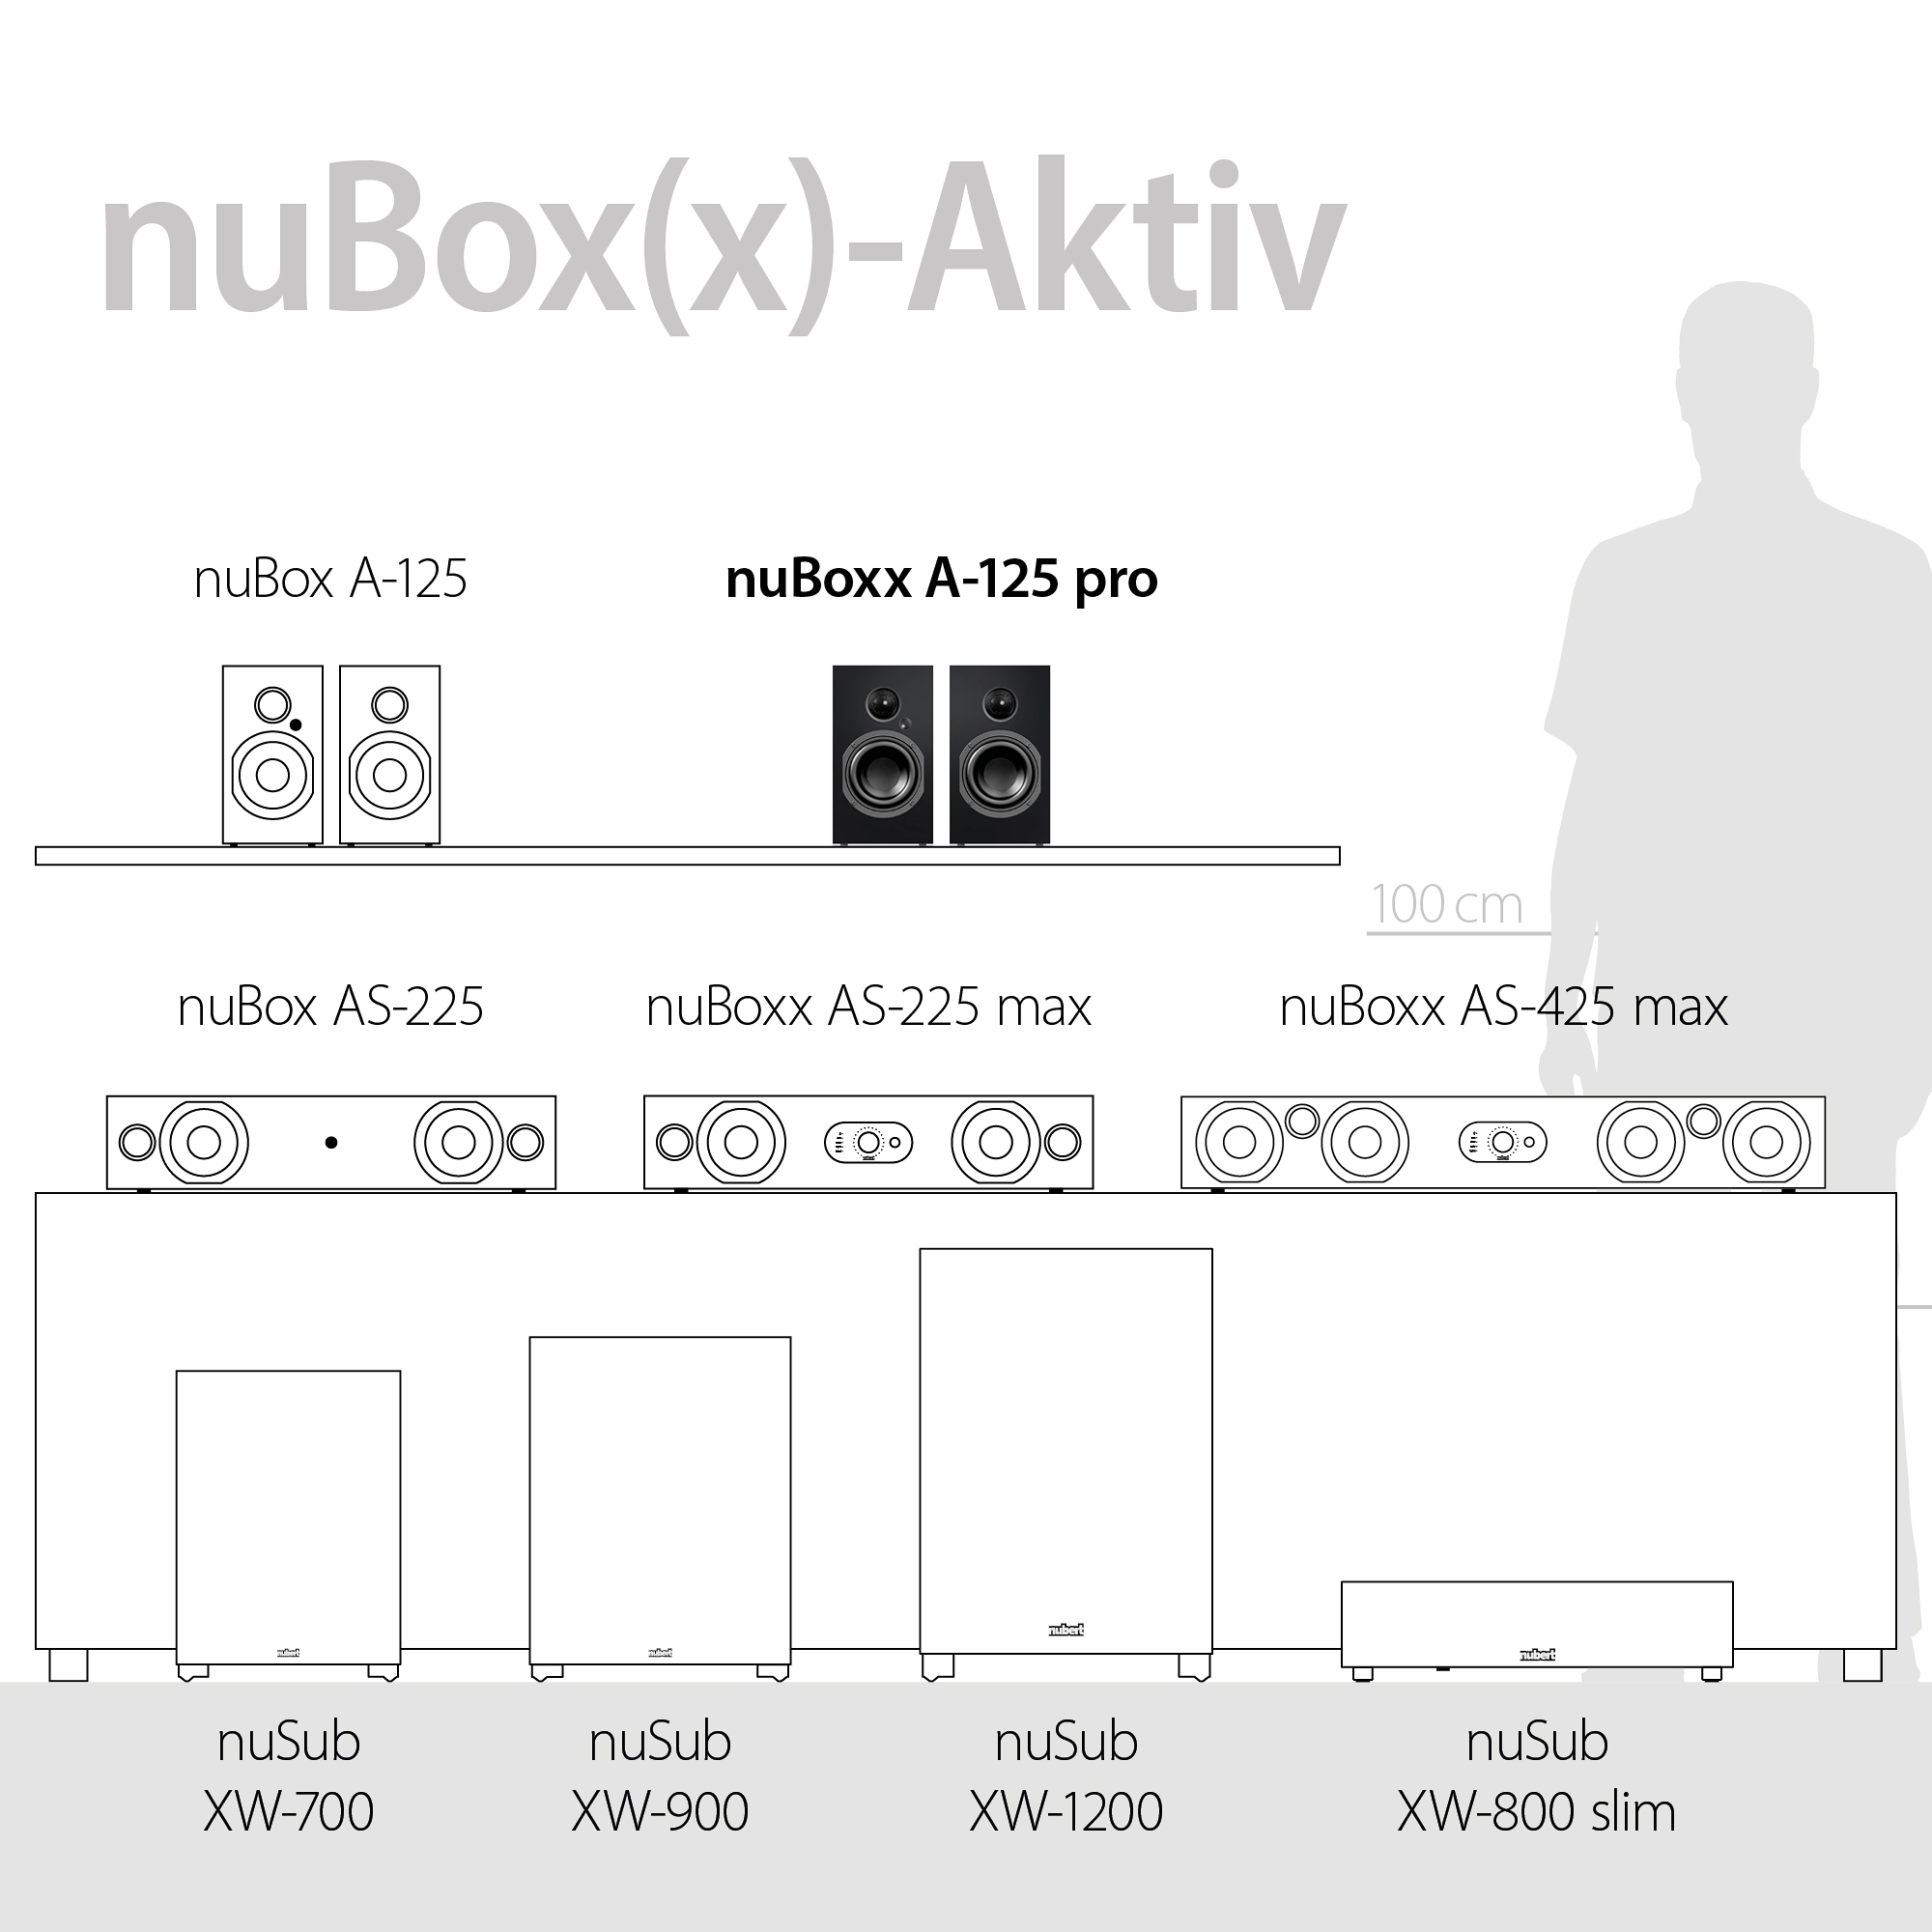 nuBoxx A-125 pro Serienüberblick